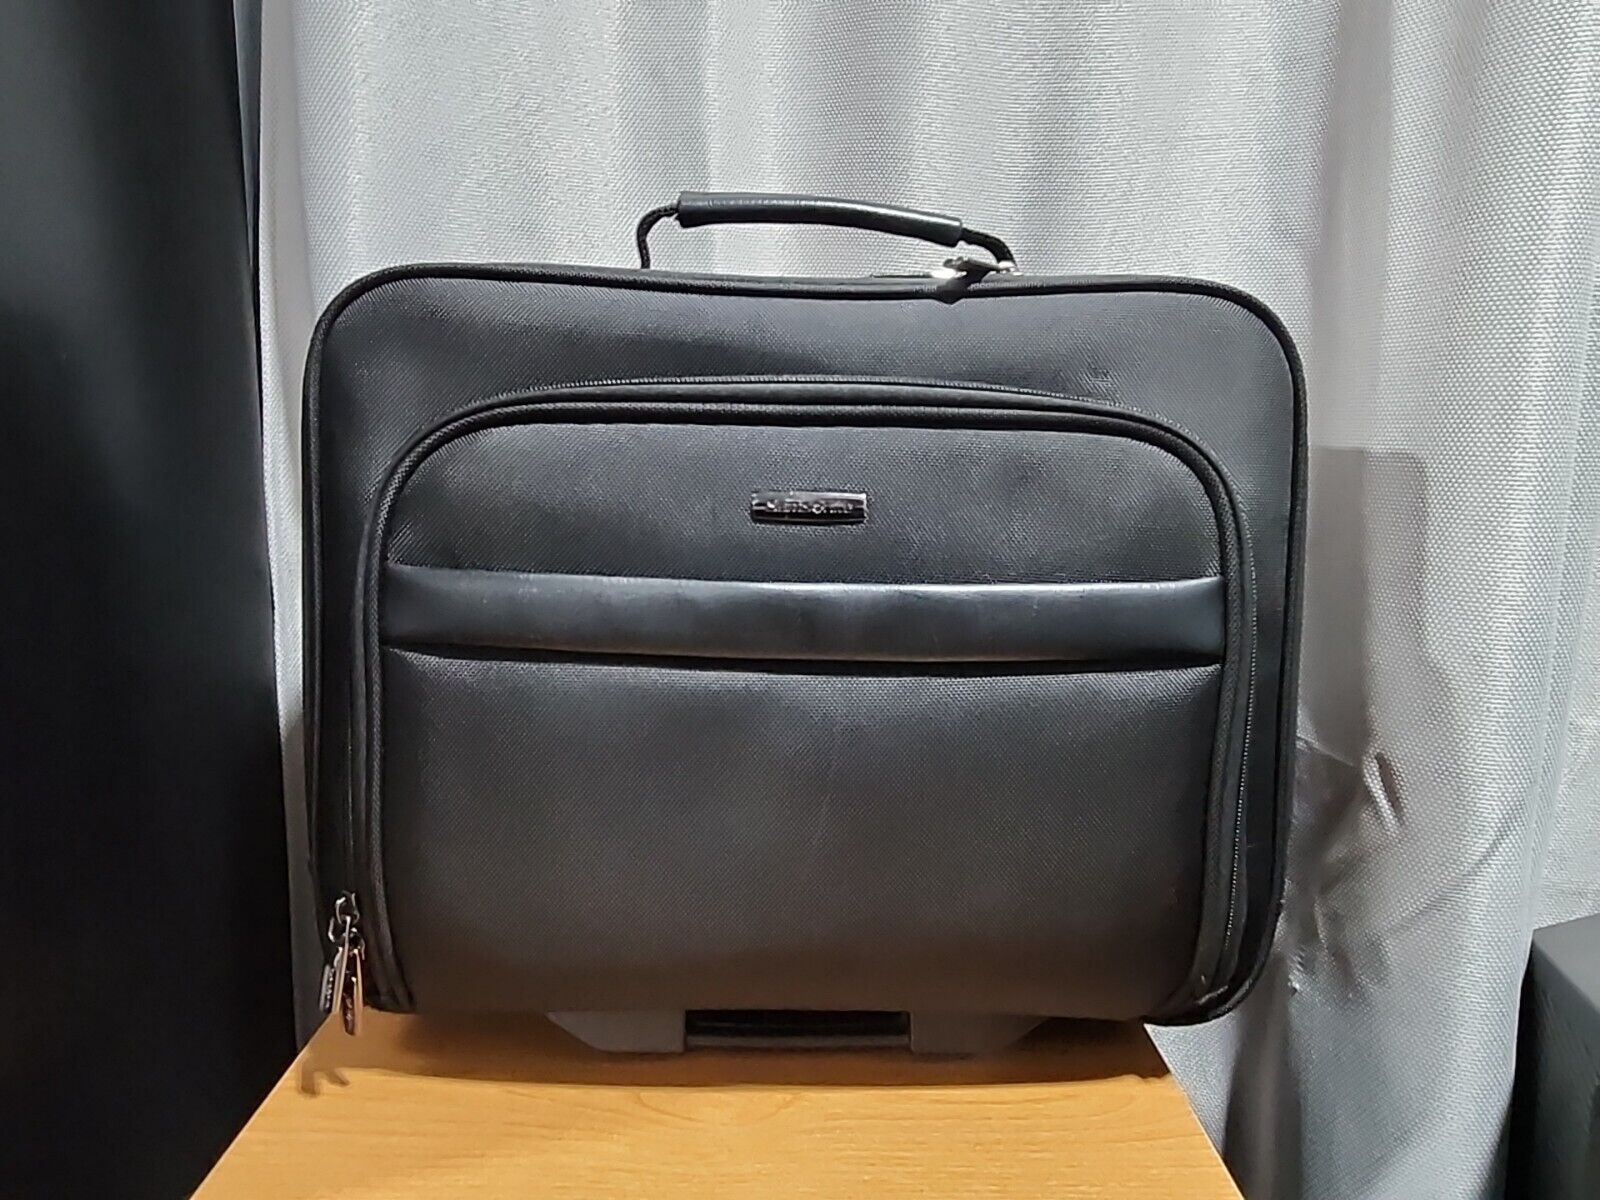 Samsonite® - Briefcase - Double Portfolio, Black - eBay